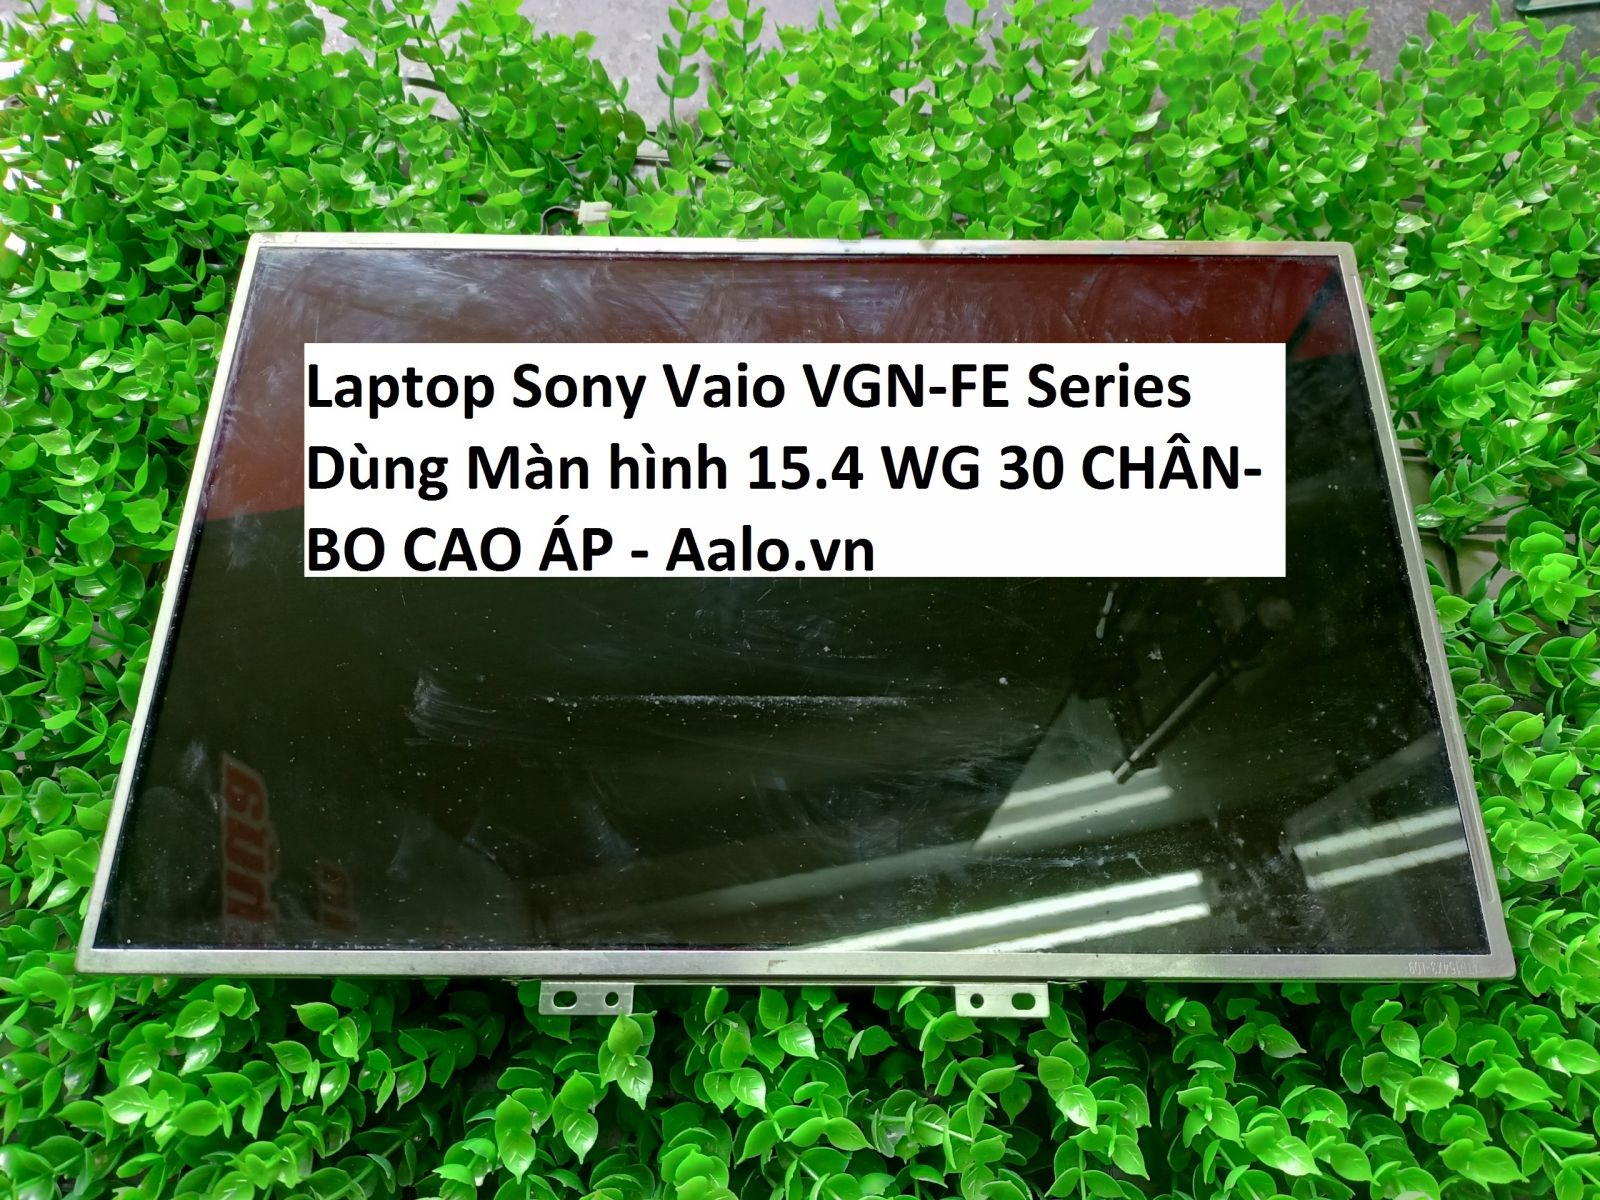 Màn hình Laptop Sony Vaio VGN-FE Series - Aalo.vn